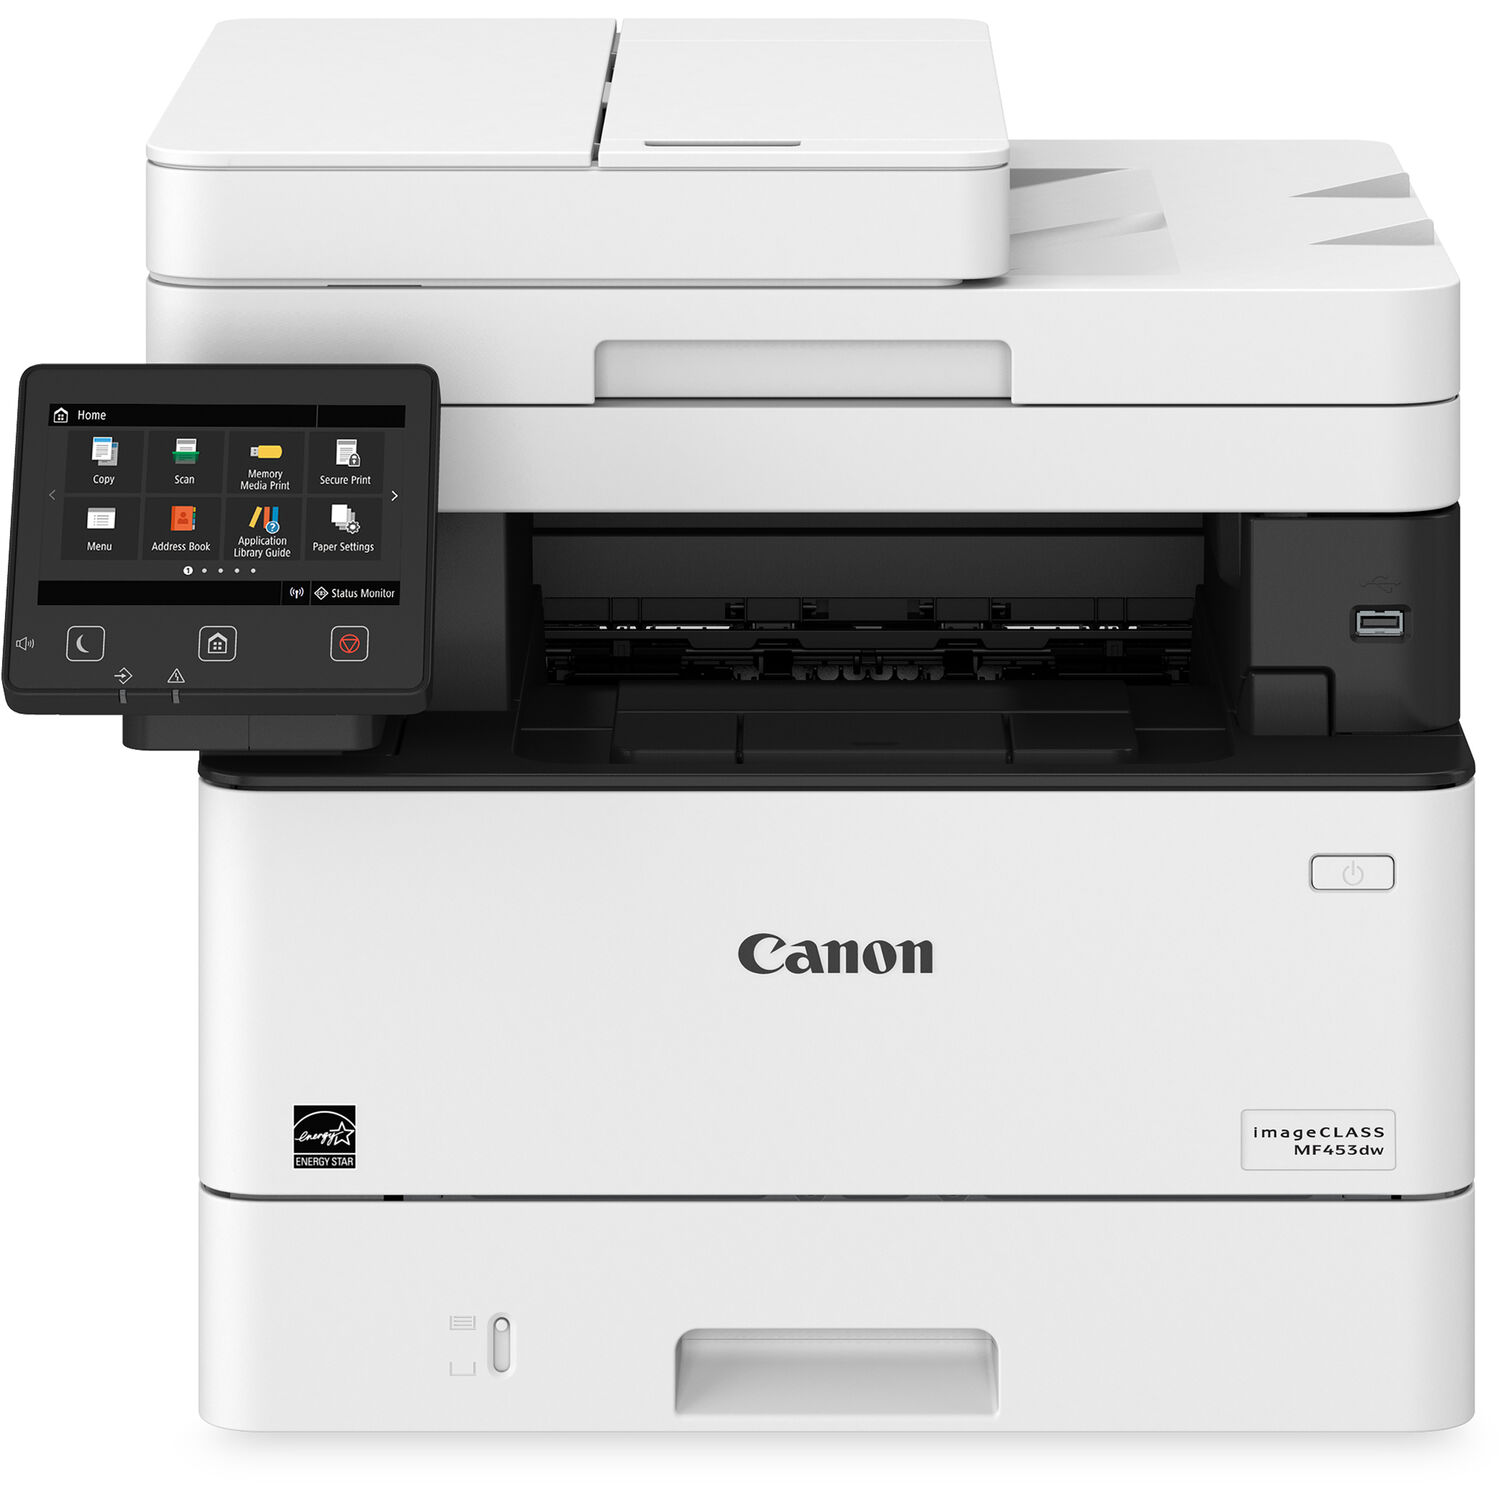 Canon imageCLASS MF453dw toner cartridges' printer